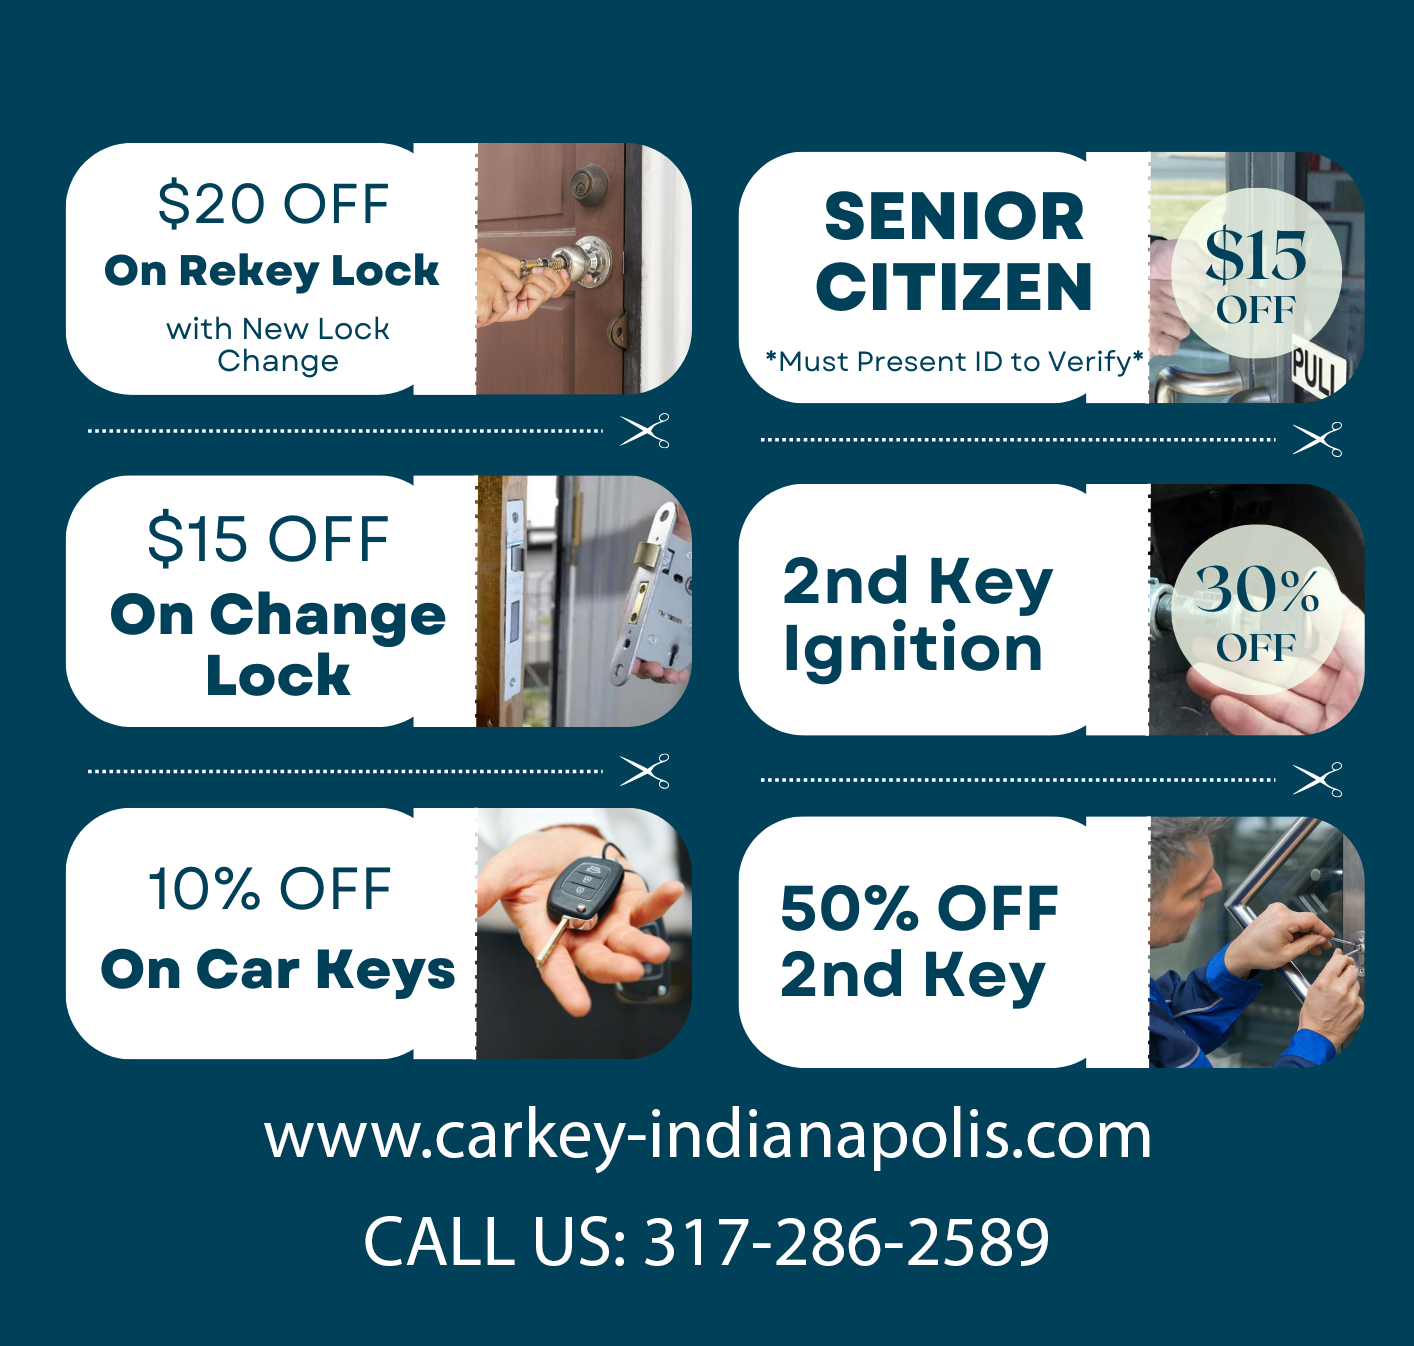 (c) Carkey-indianapolis.com